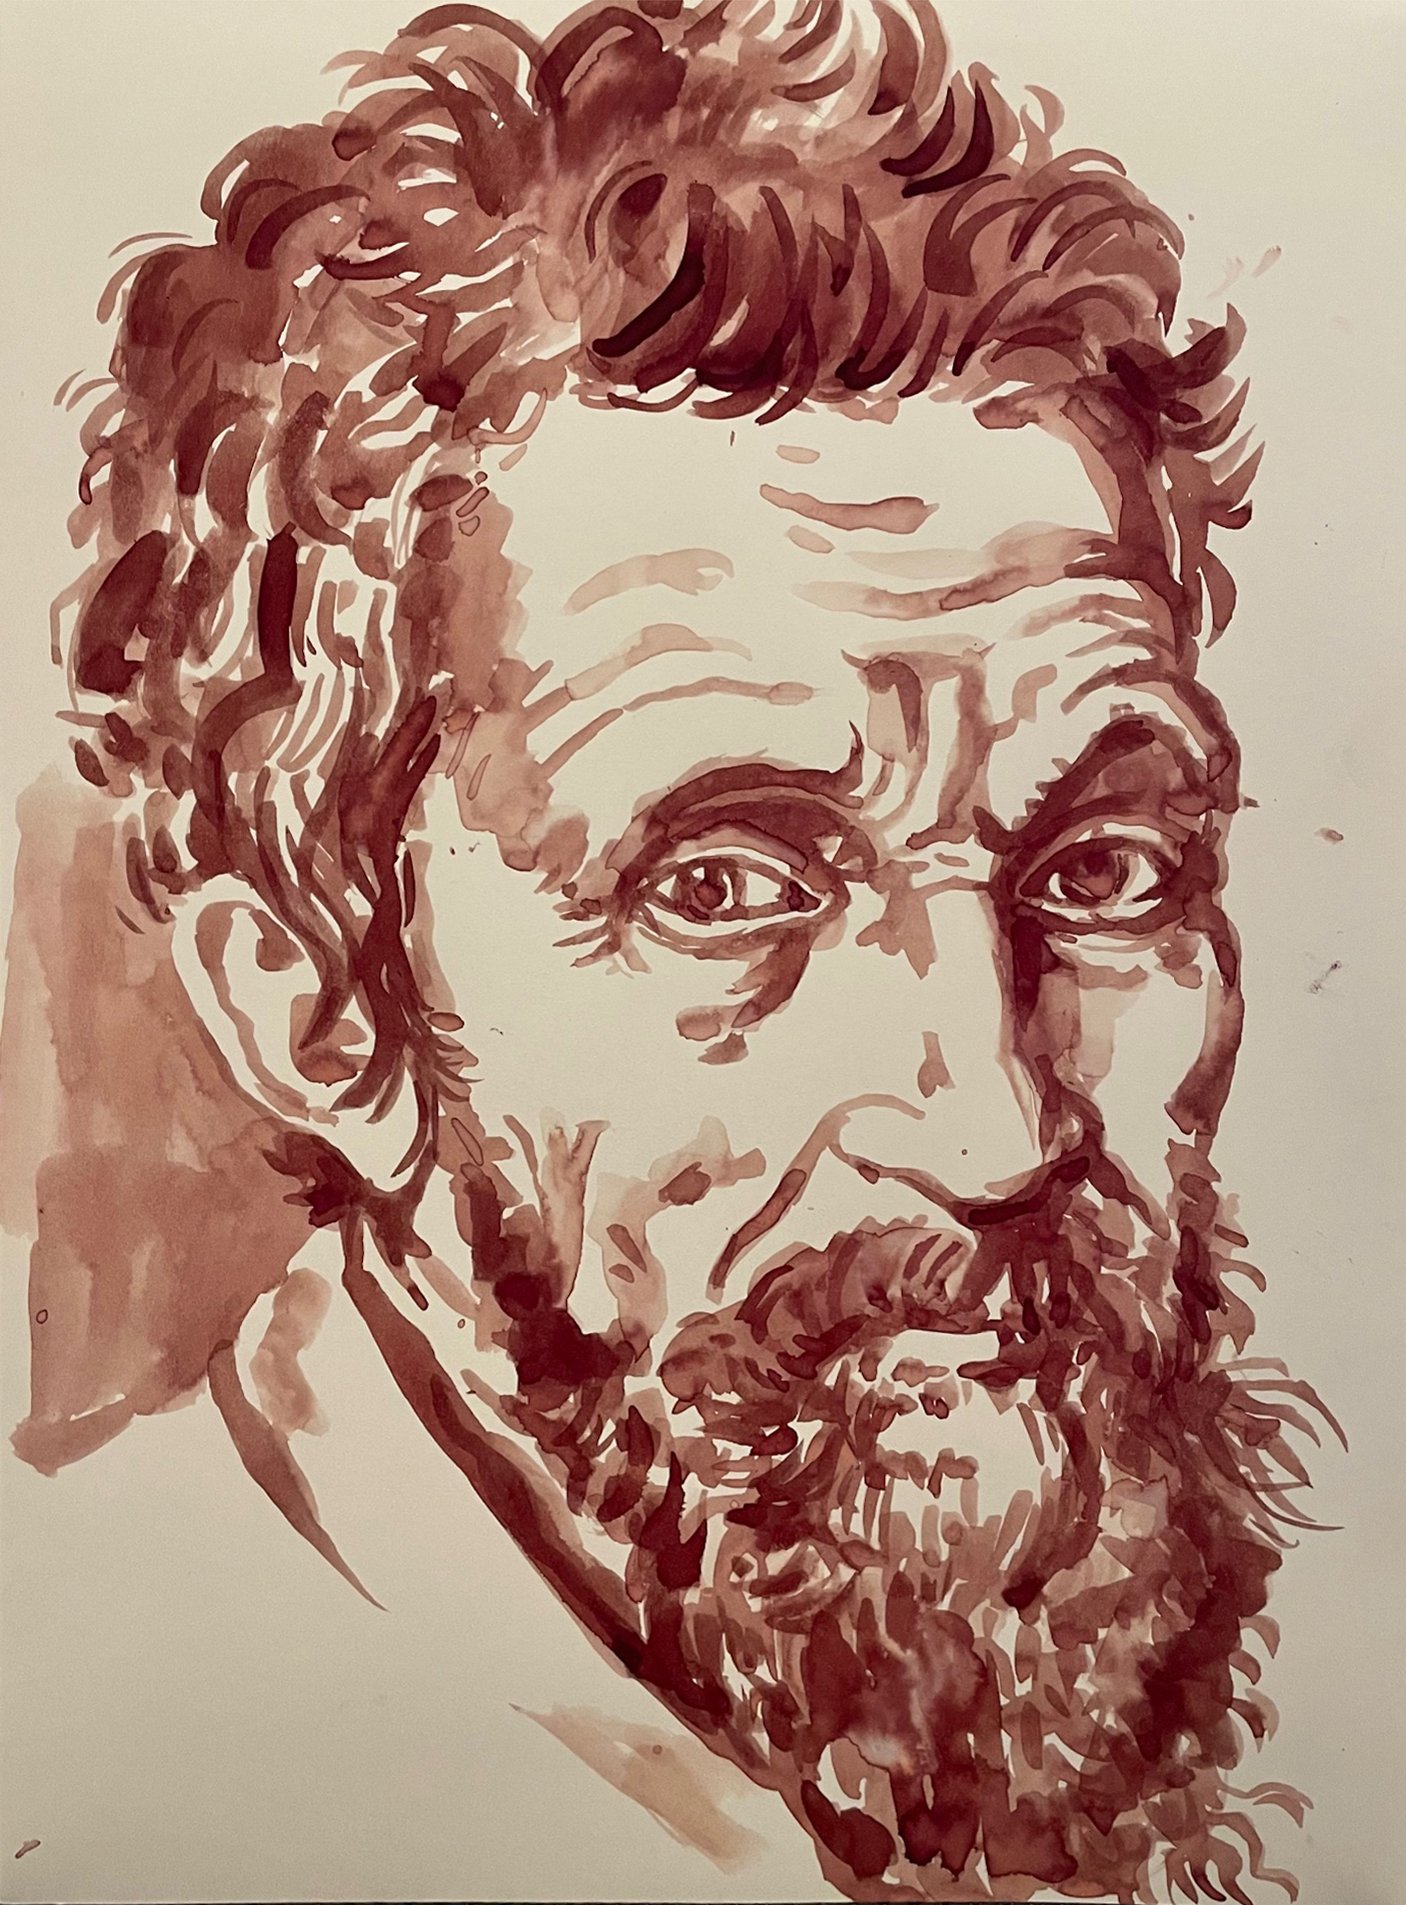 Michelangelo_watercolor-ink.jpg